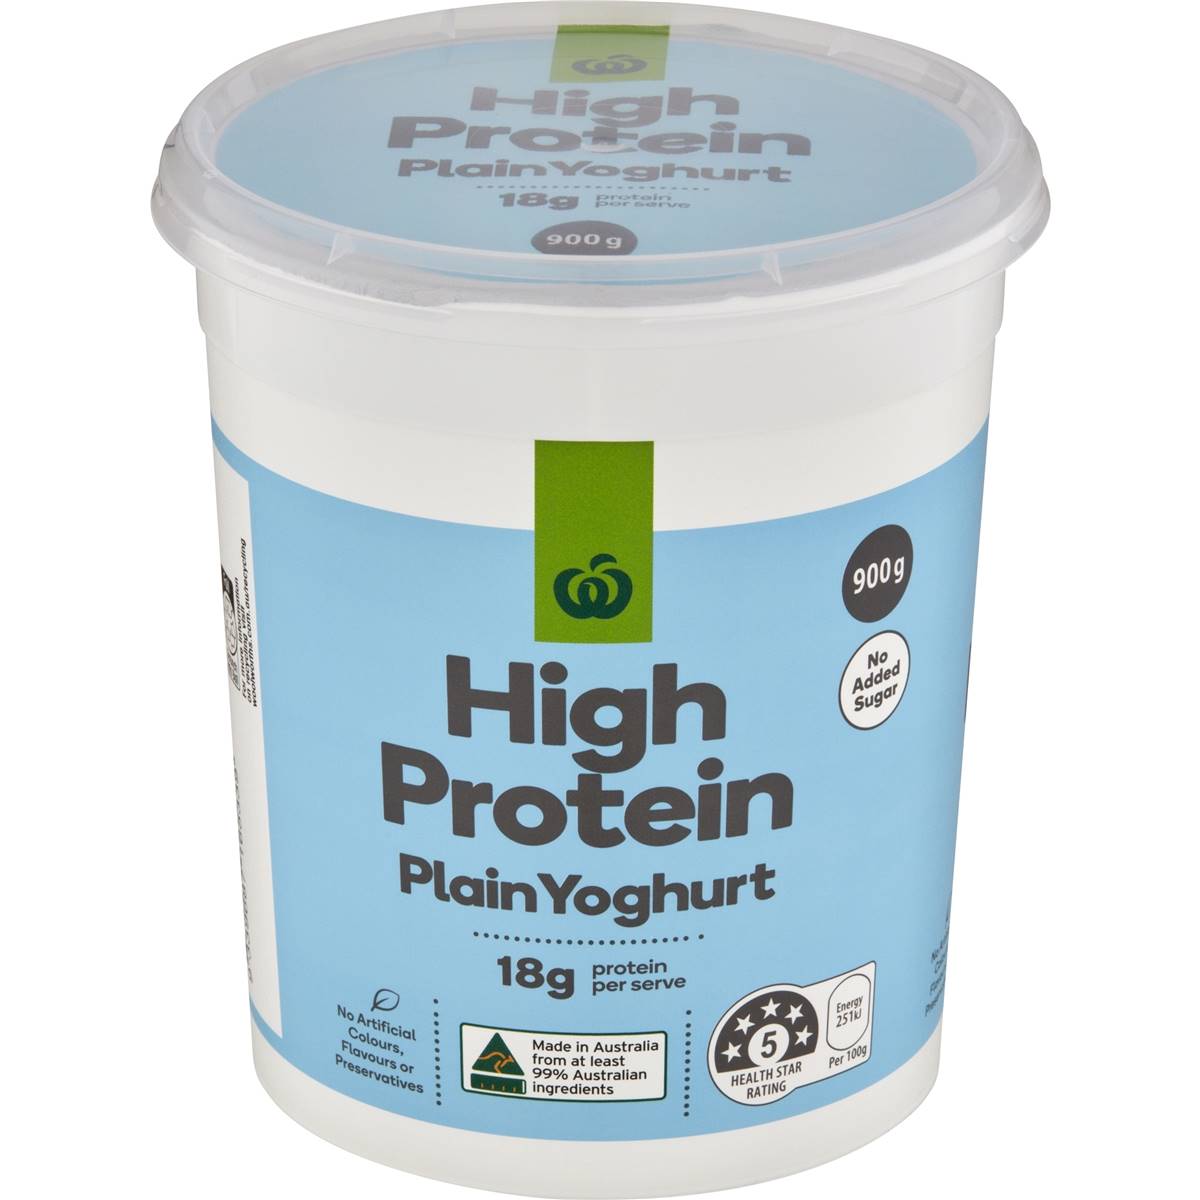 Calories in Woolworths High Protein Plain Yoghurt